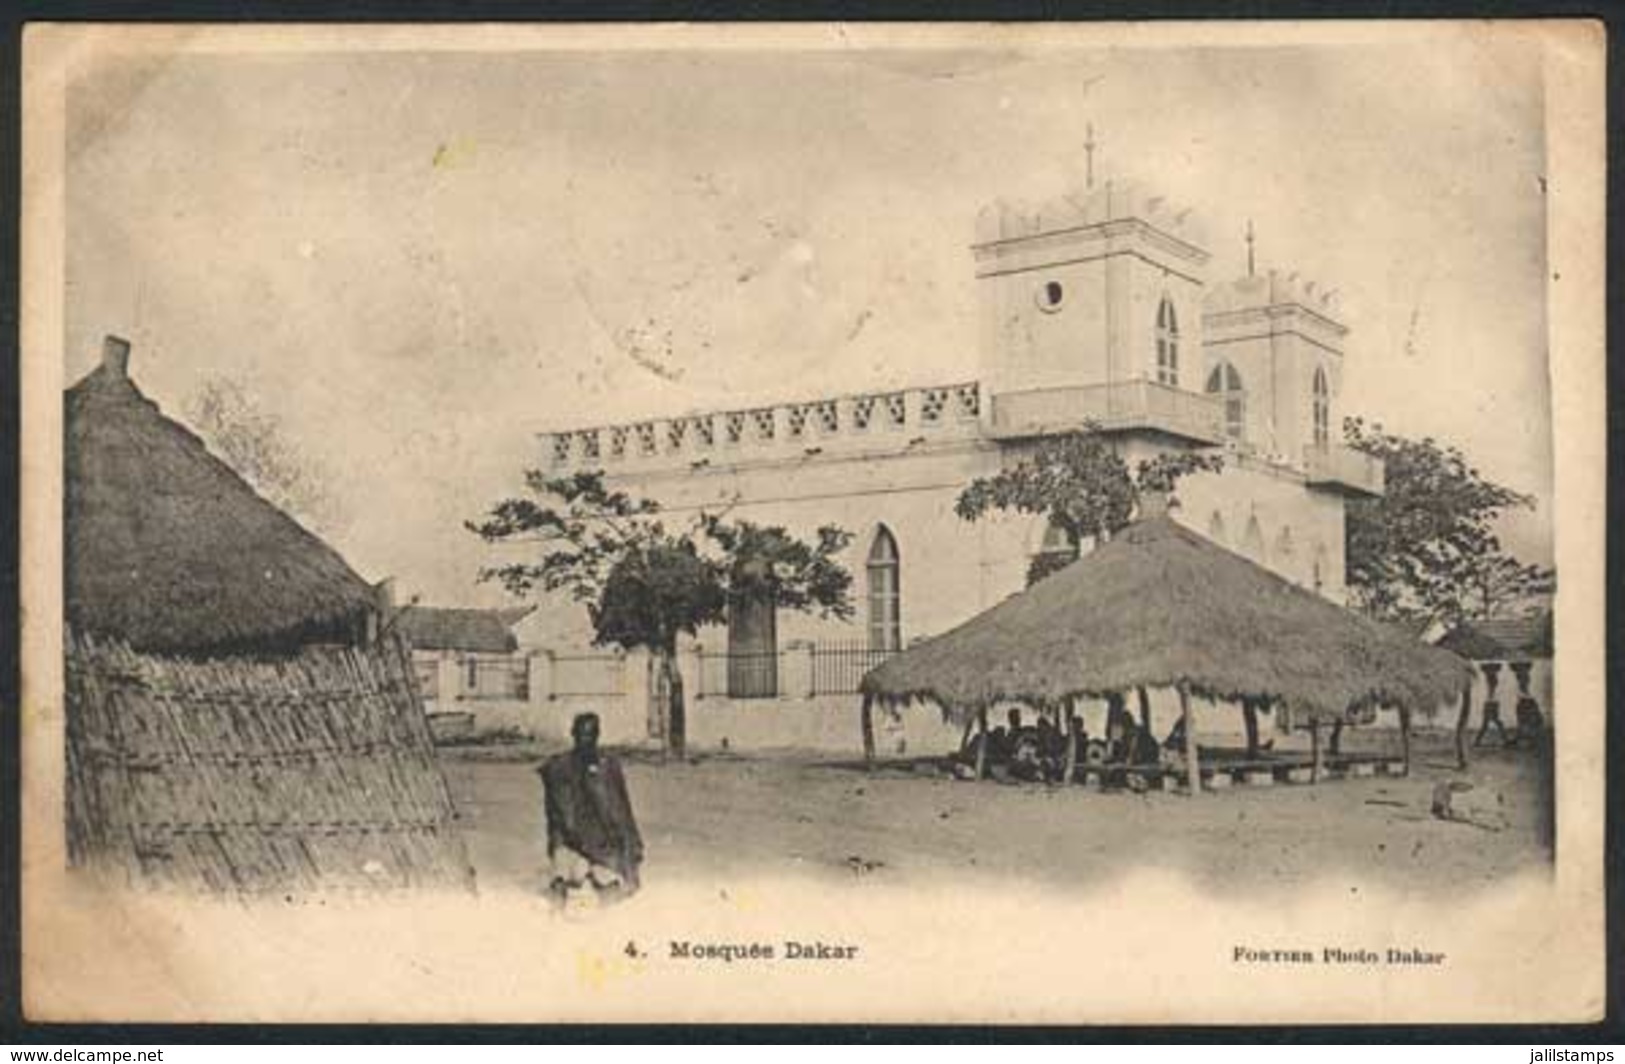 1469 SENEGAL: DAKAR: Mosque, Ed. Fortier, Sent To Argentina In 1903, VF! - Sénégal